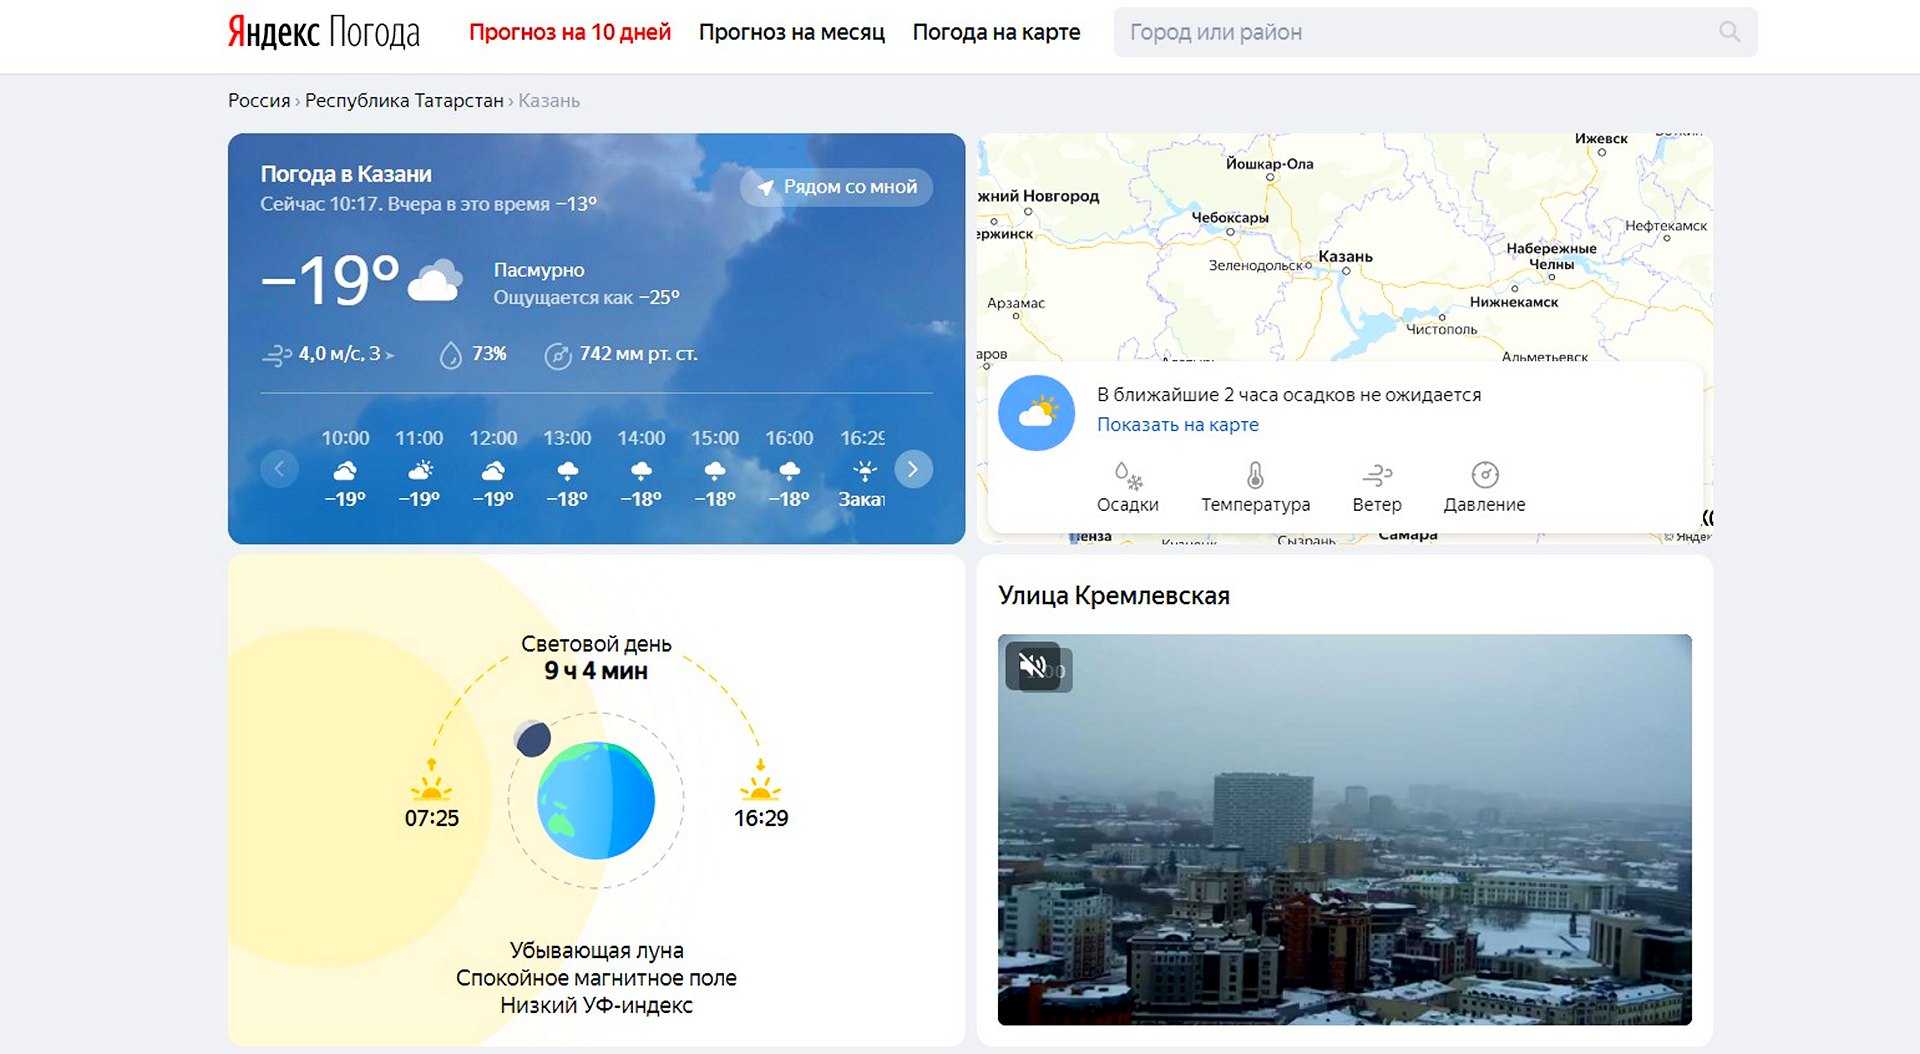 10 pogoda. Яндекс погода. Прогноз погоды Яндекс. Яндекс погода карта. Яндекс.погода прогноз погоды.